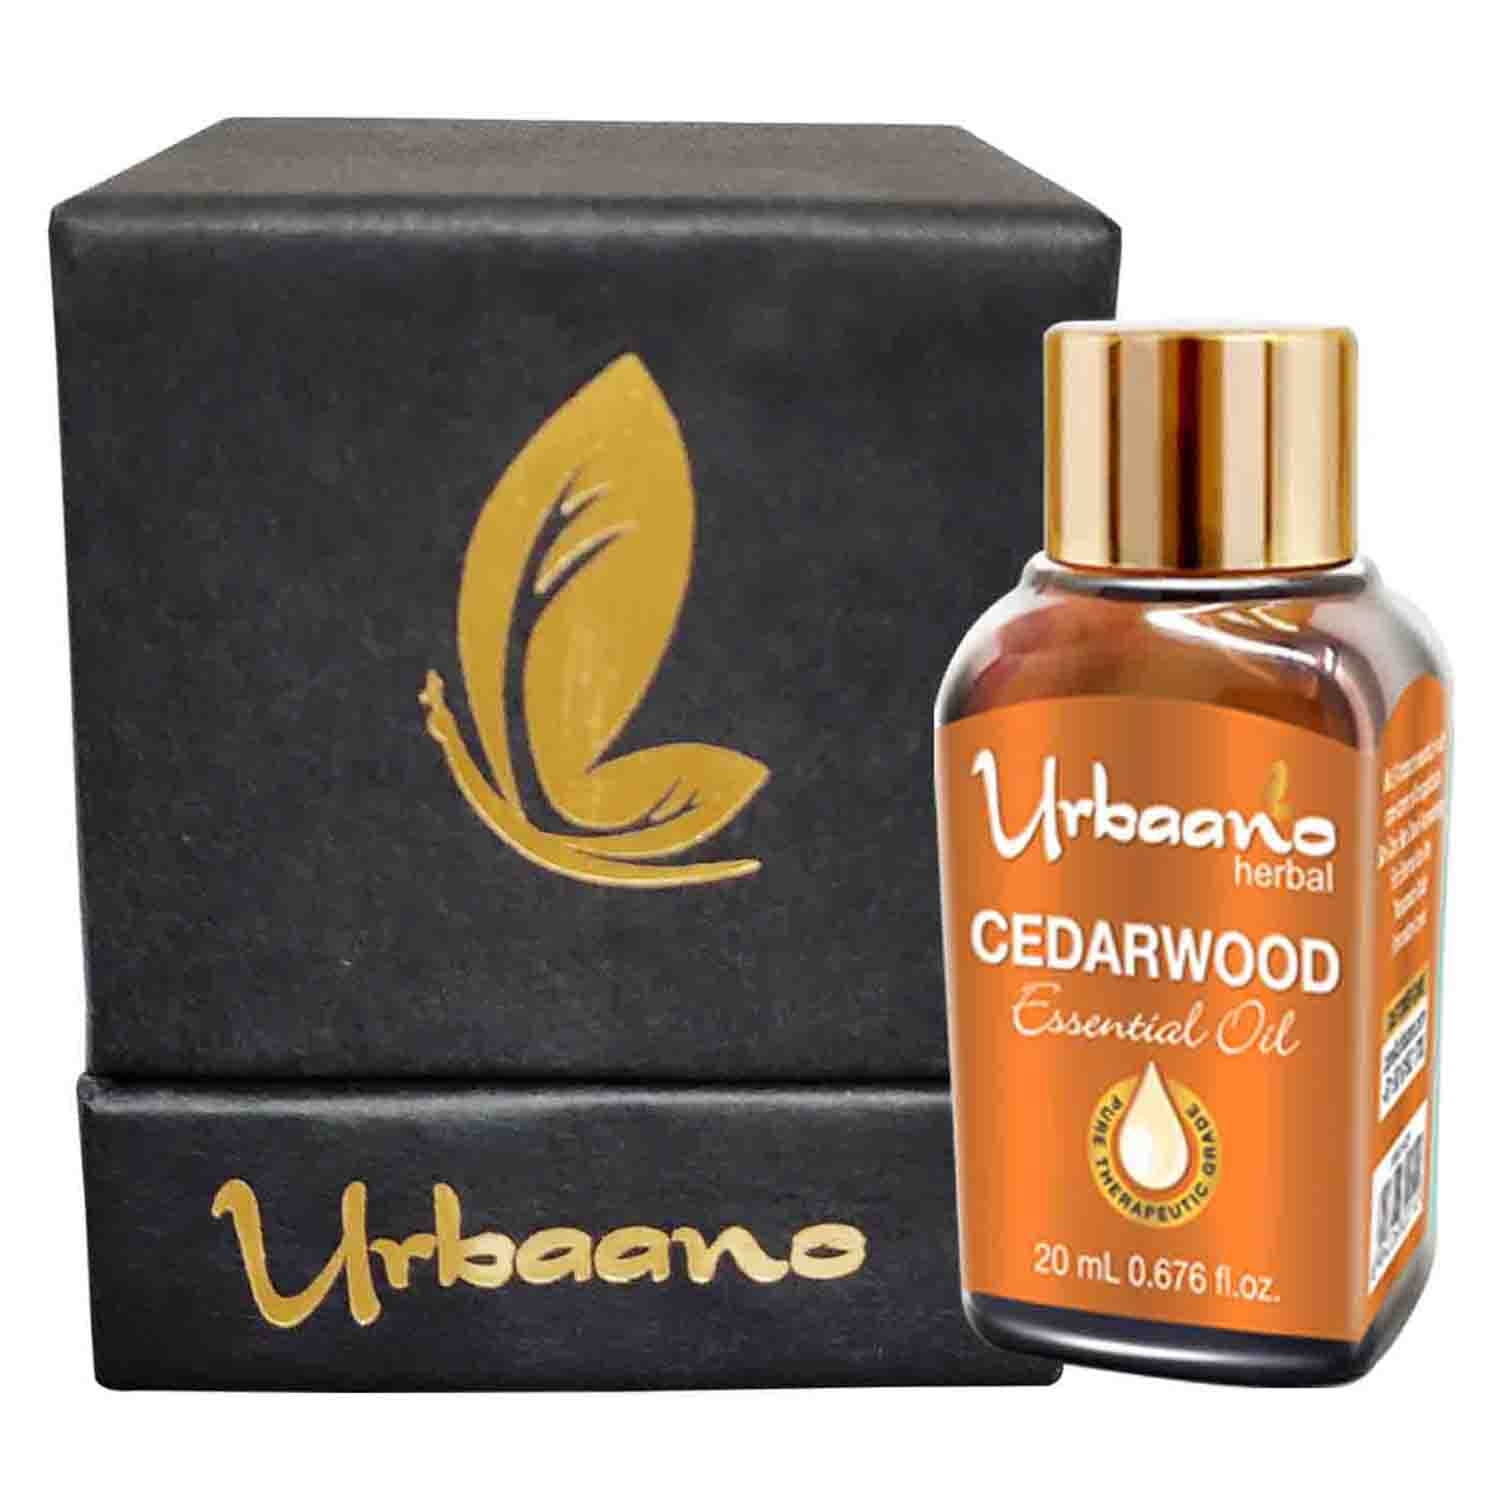 Urbaano Herbal | Urbaano Herbal Cedarwood Essential Oil for Aromatherapy natural & Pure -20ml